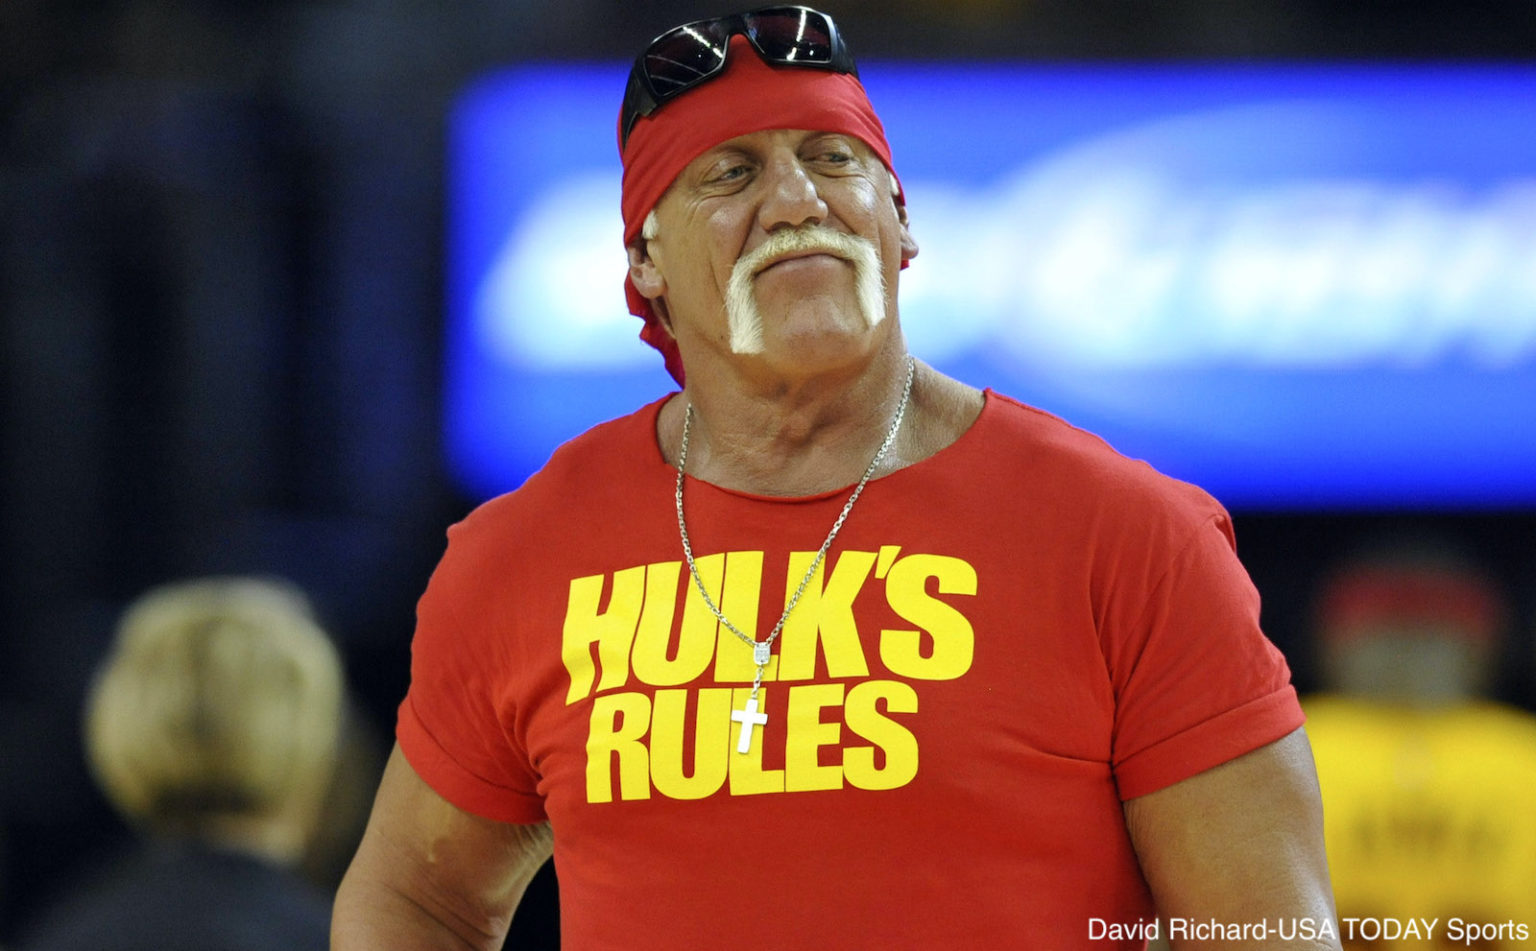 Hulk Hogan Second Wife Jennifer McDaniel Got Divorced